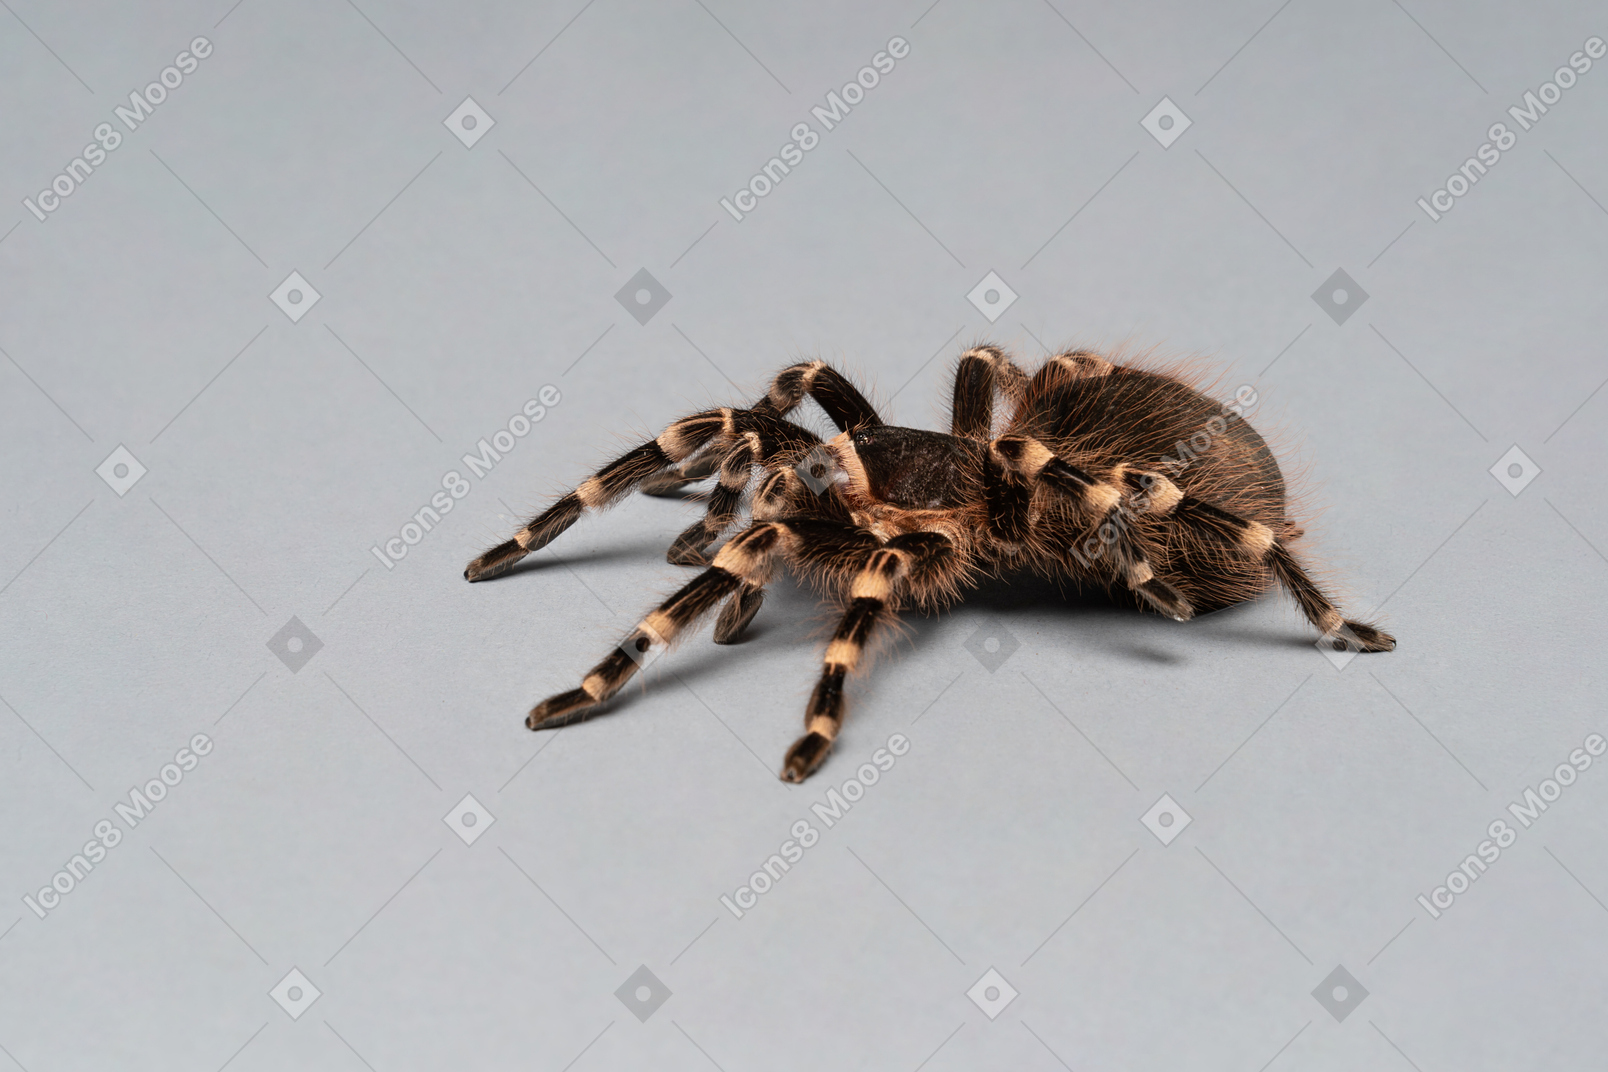 A black and yellow tarantula